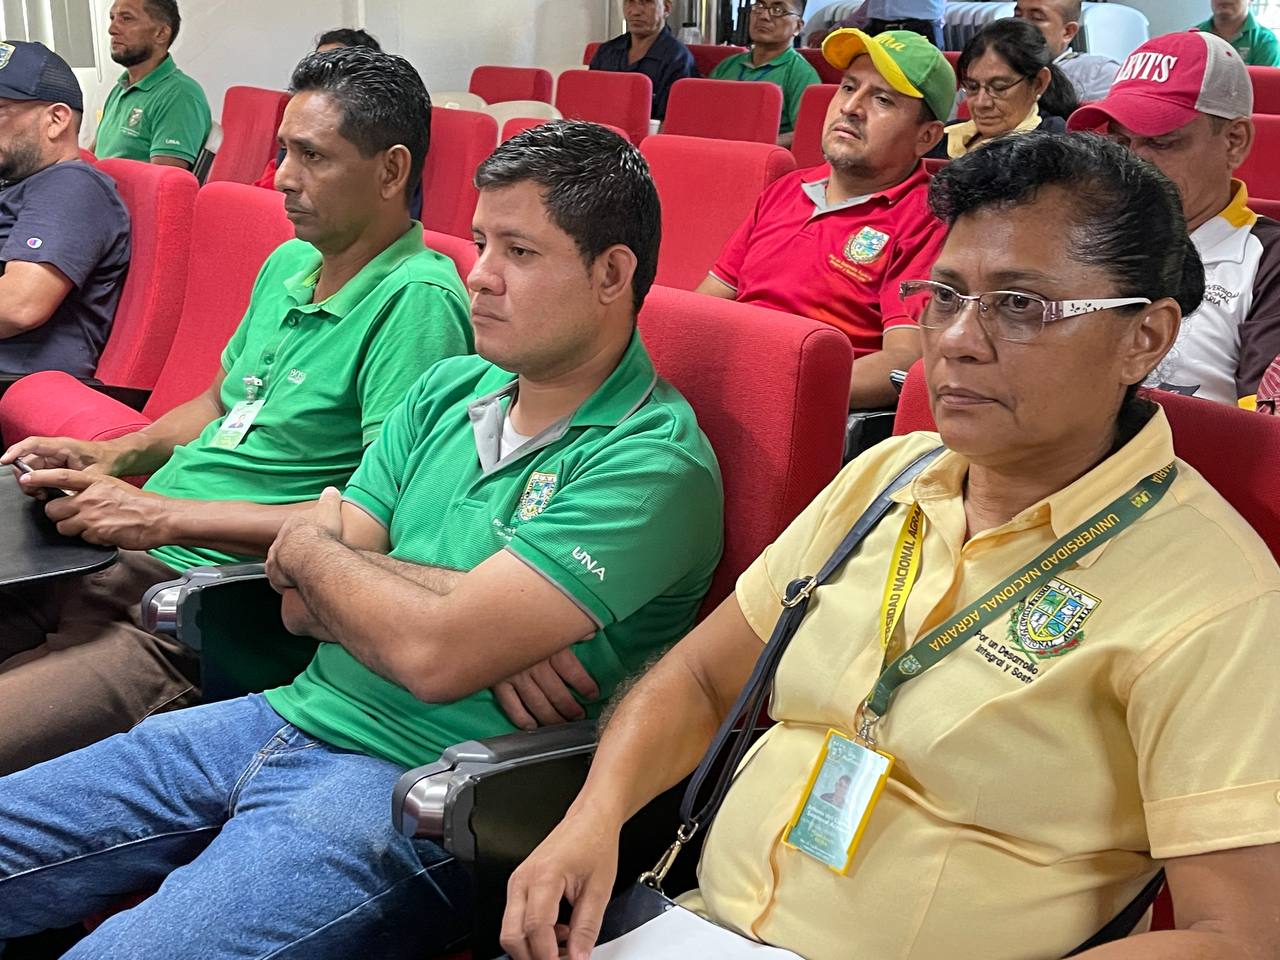 Conferencia Salva tu vida, Universidad Nacional Agraria, Nicaragua